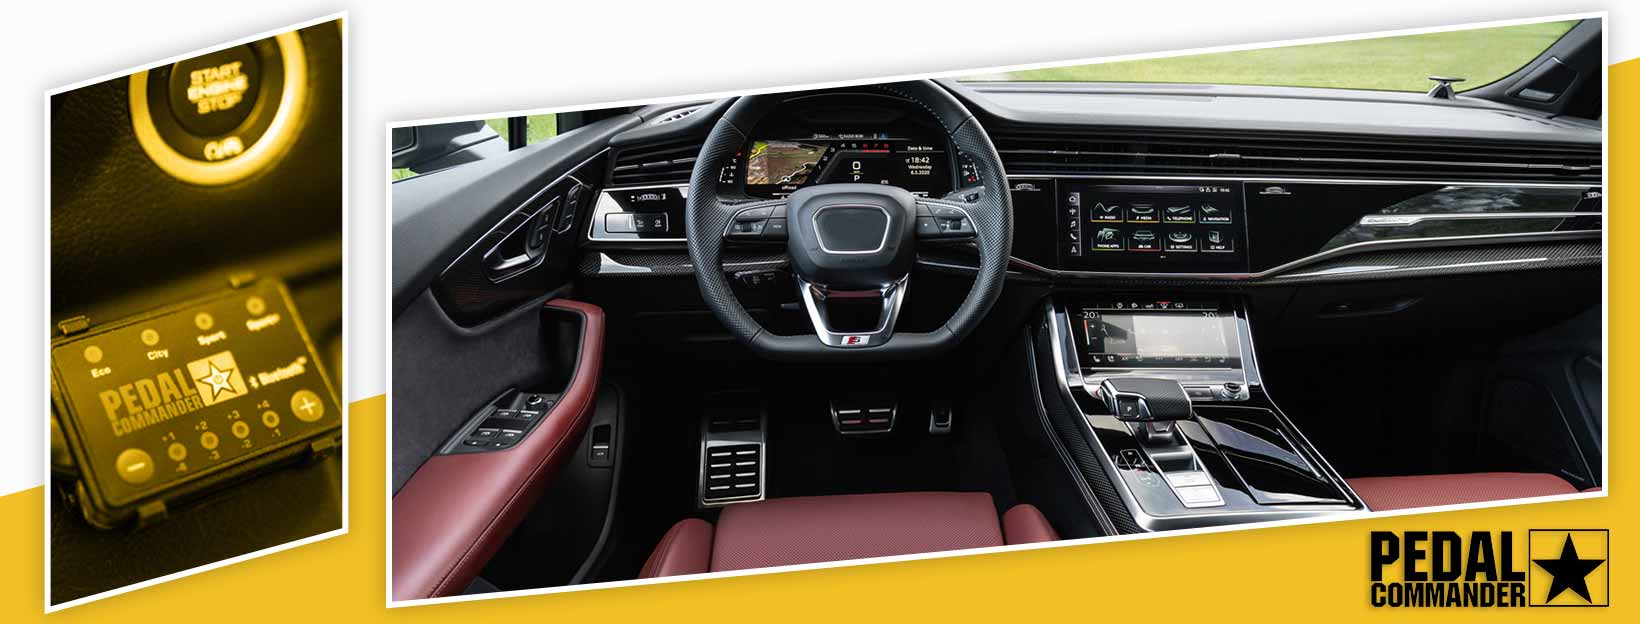 Pedal Commander for Audi SQ7 - interior